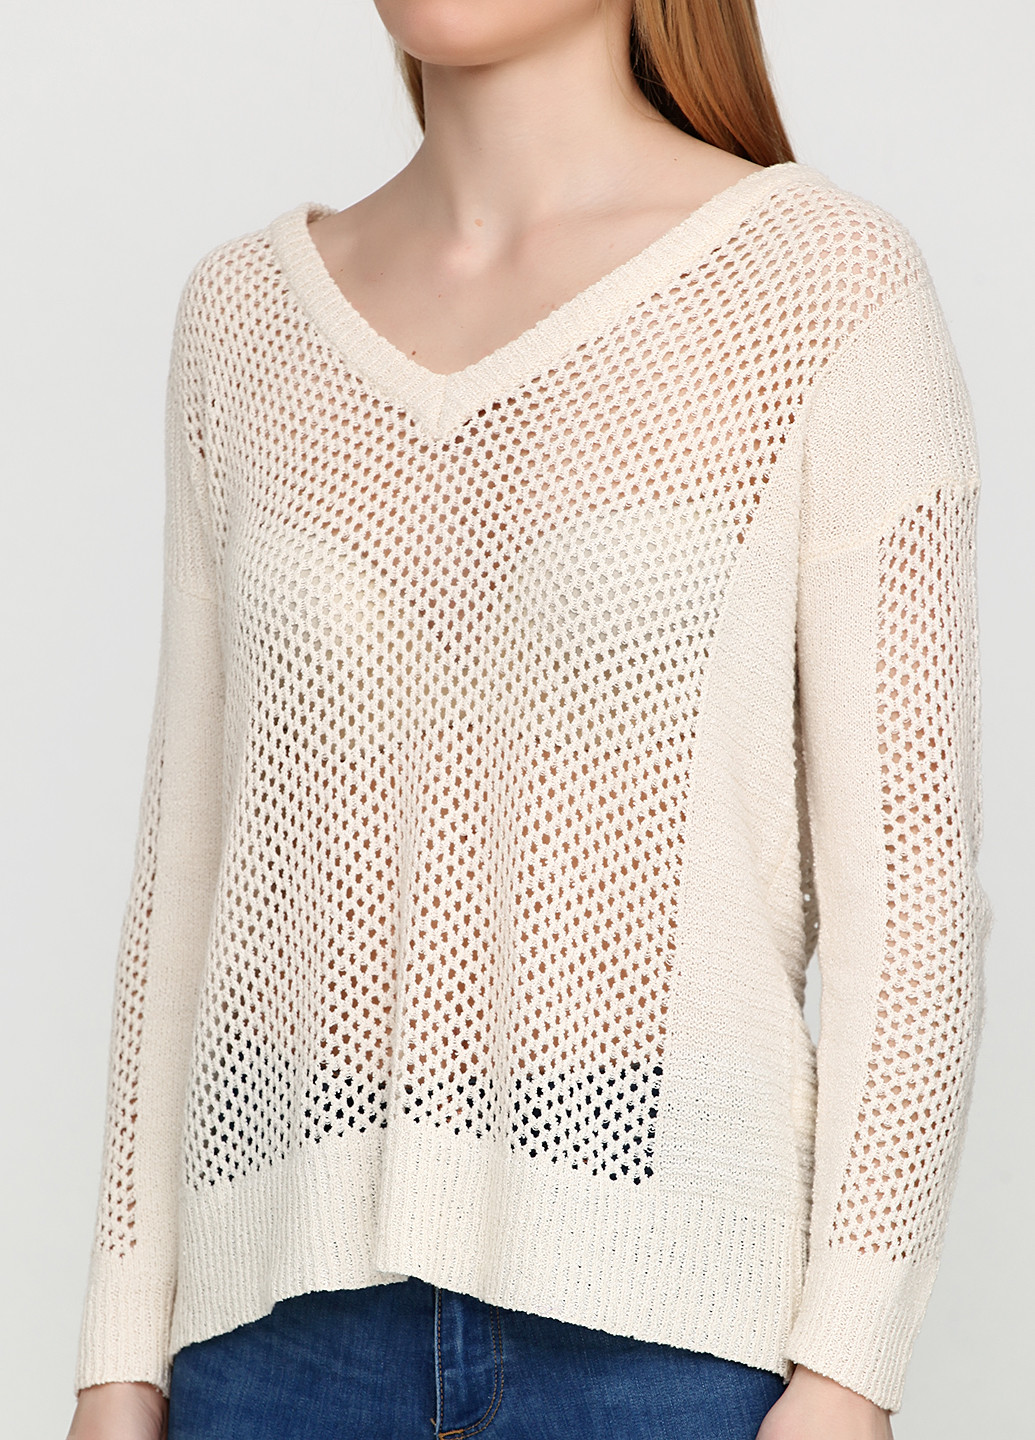 Молочный демисезонный пуловер пуловер Vero Moda